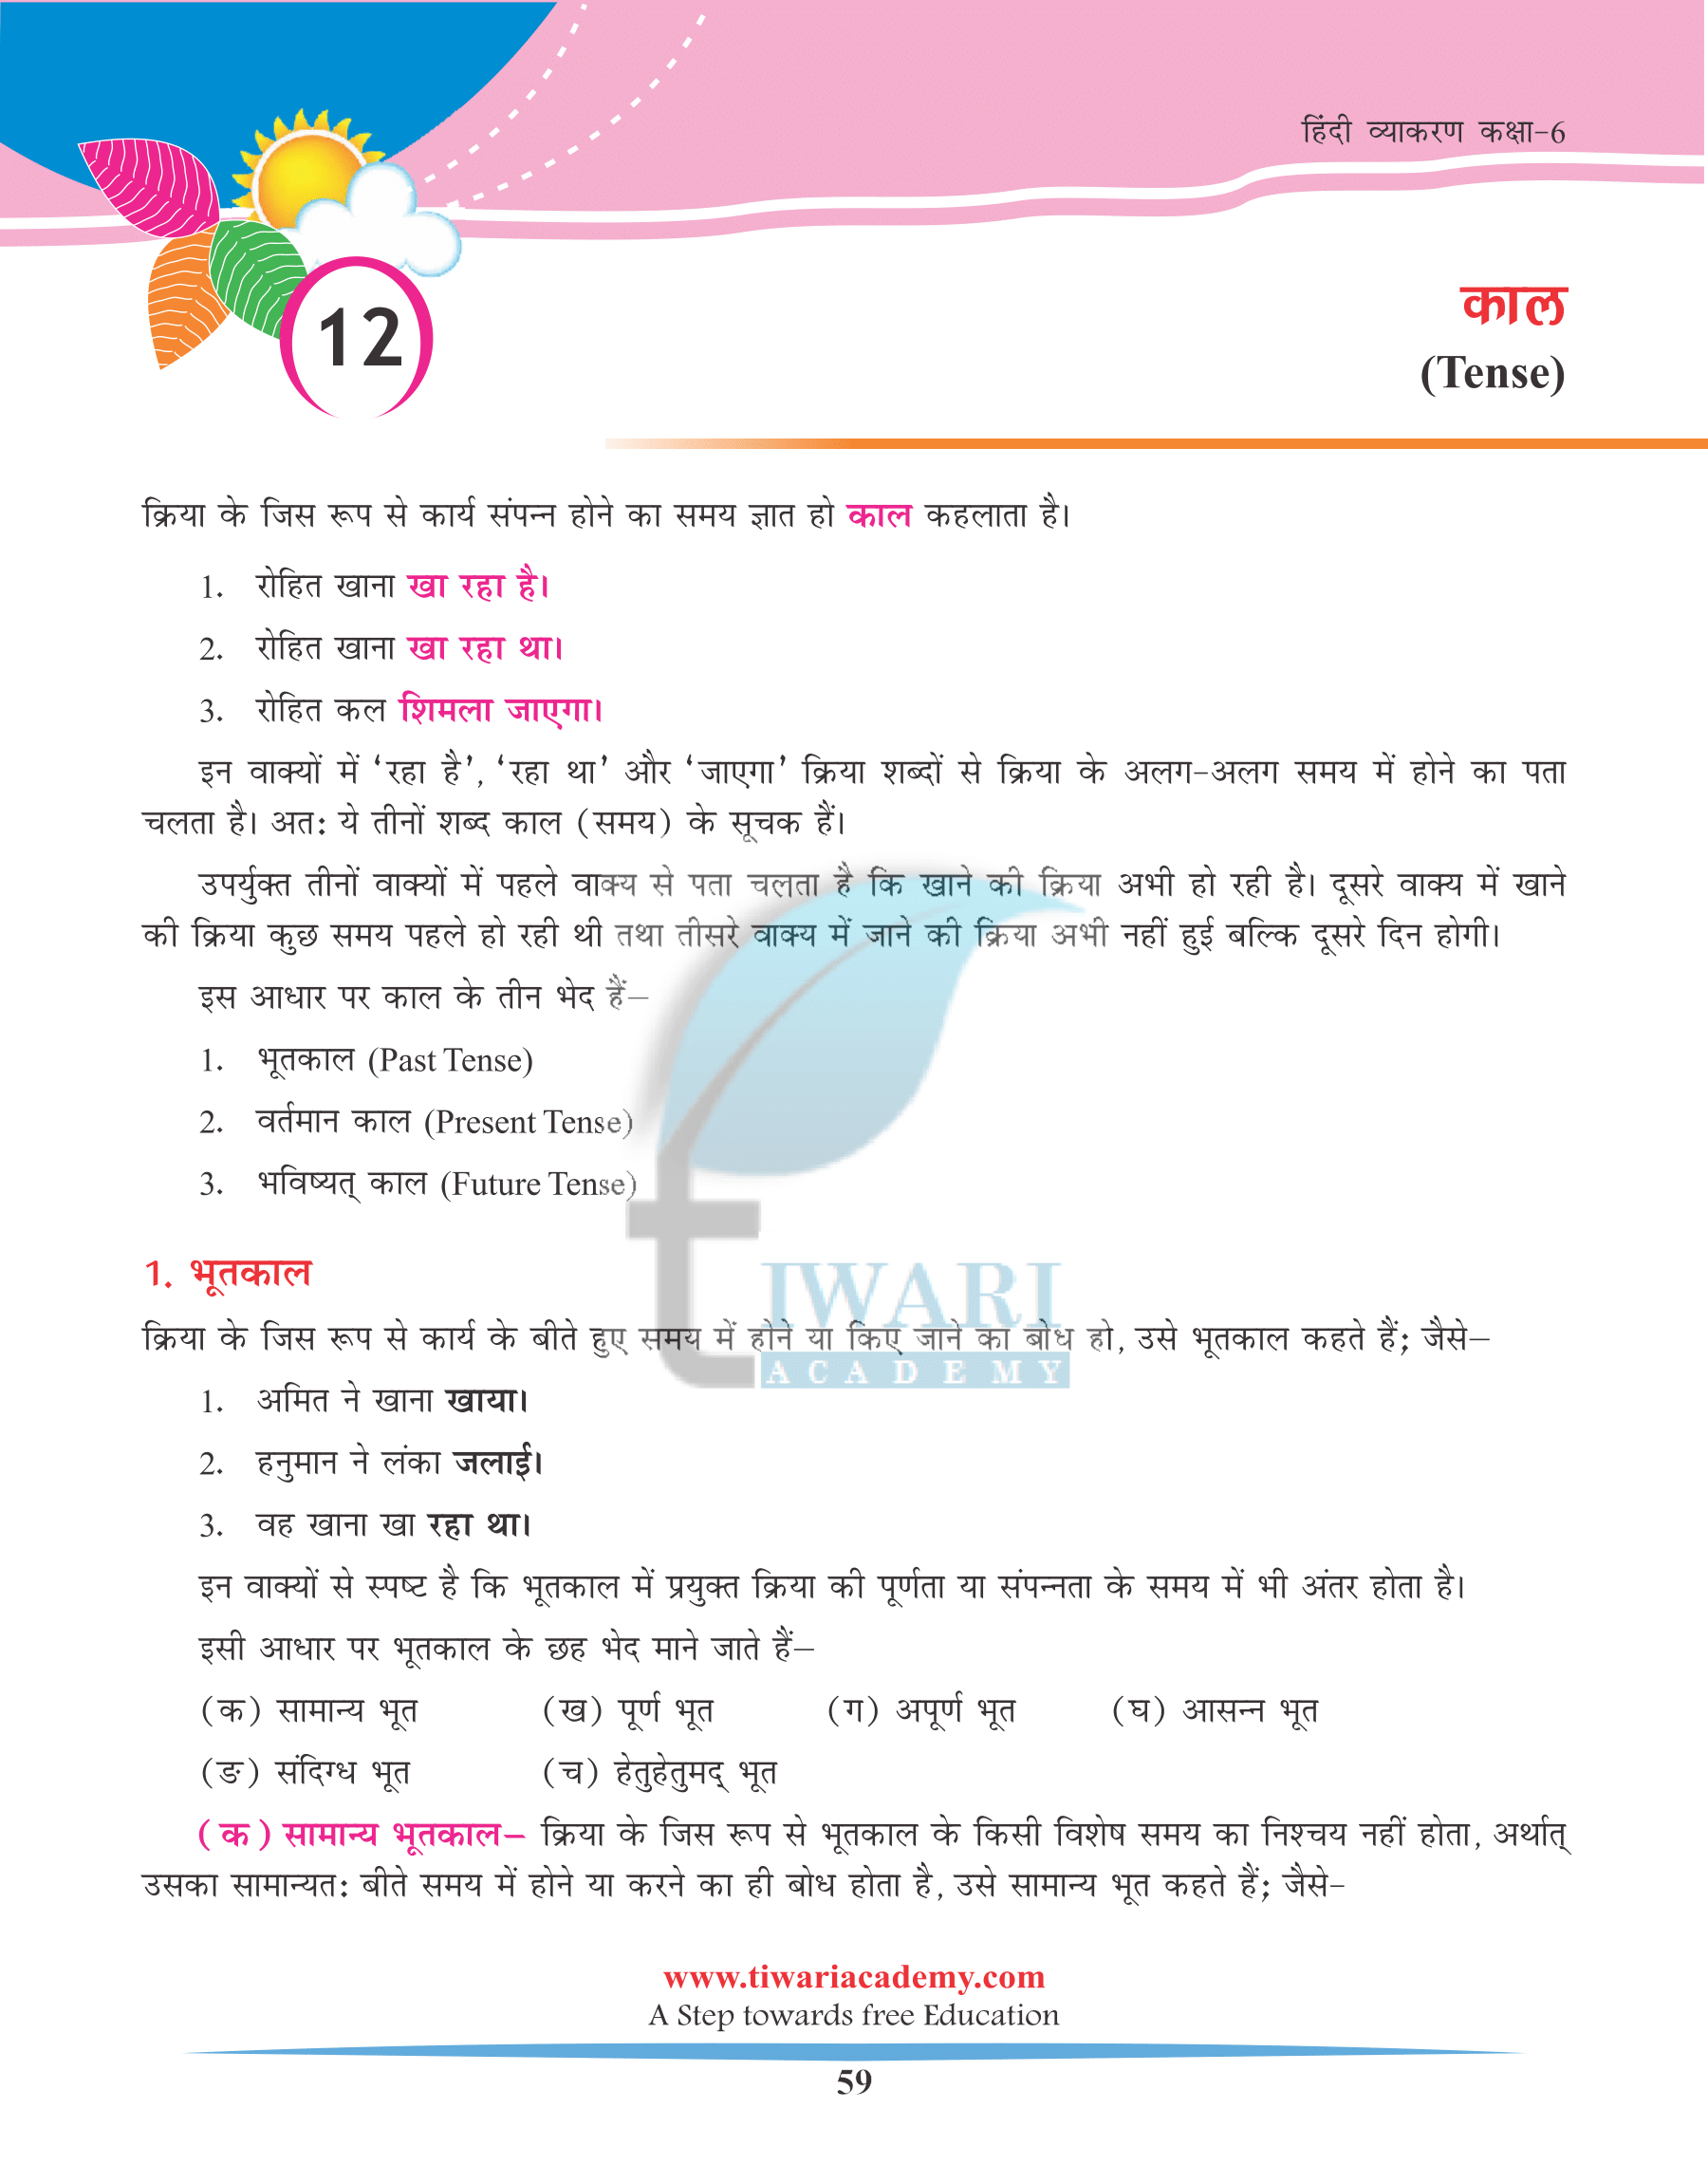 Class 6 Hindi Grammar Chapter 12 Kaal bhoot, bhavishy vartman